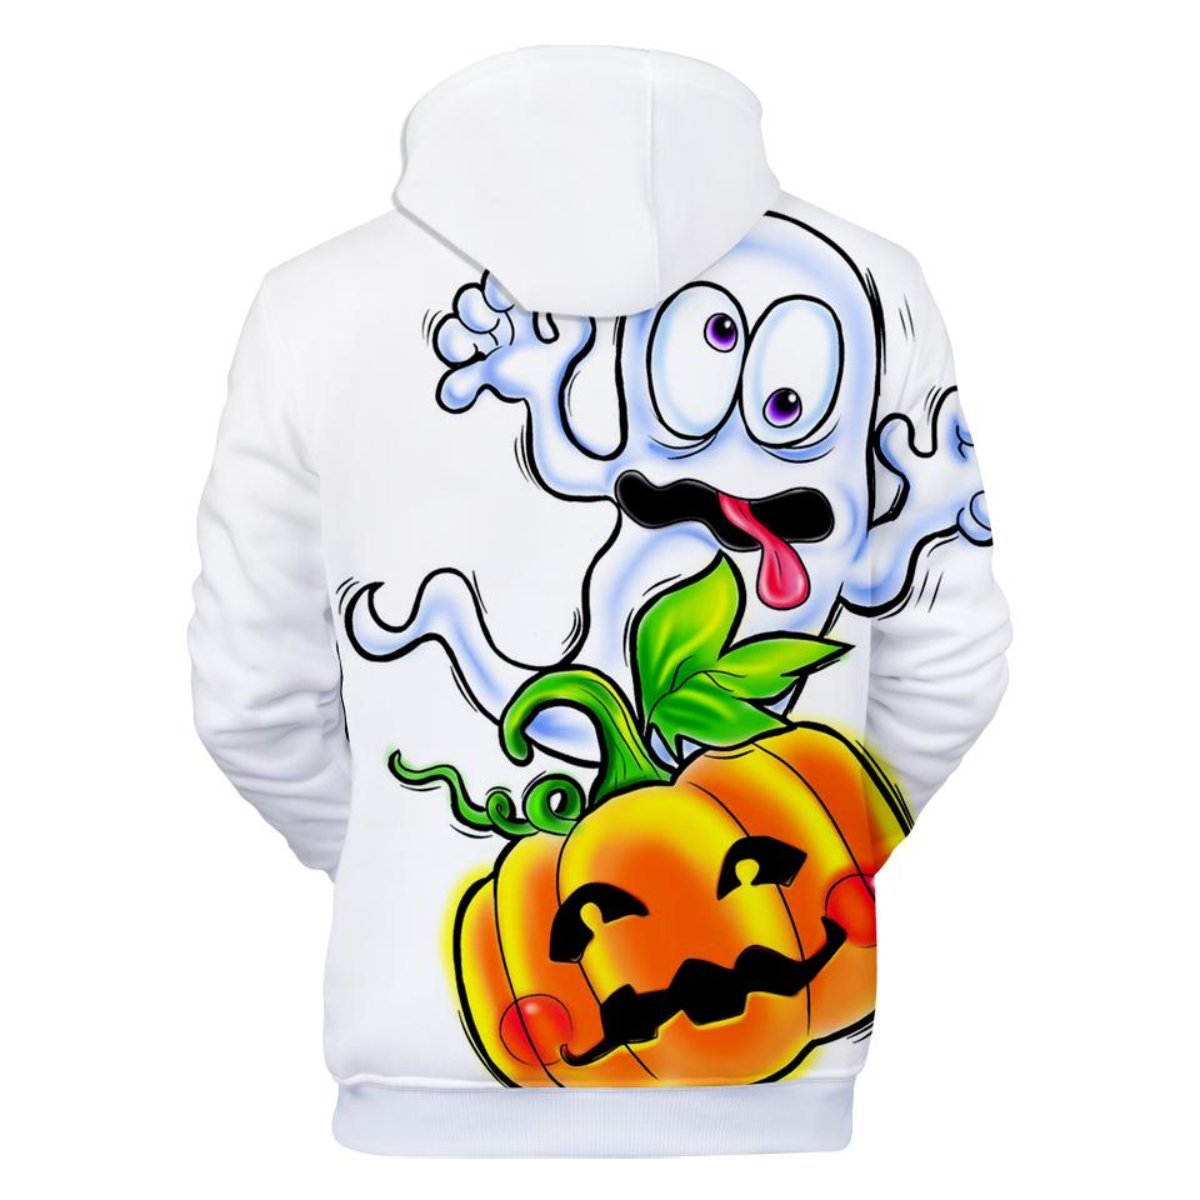 The Crazy Ghost 3D Hooded Sweatshirt